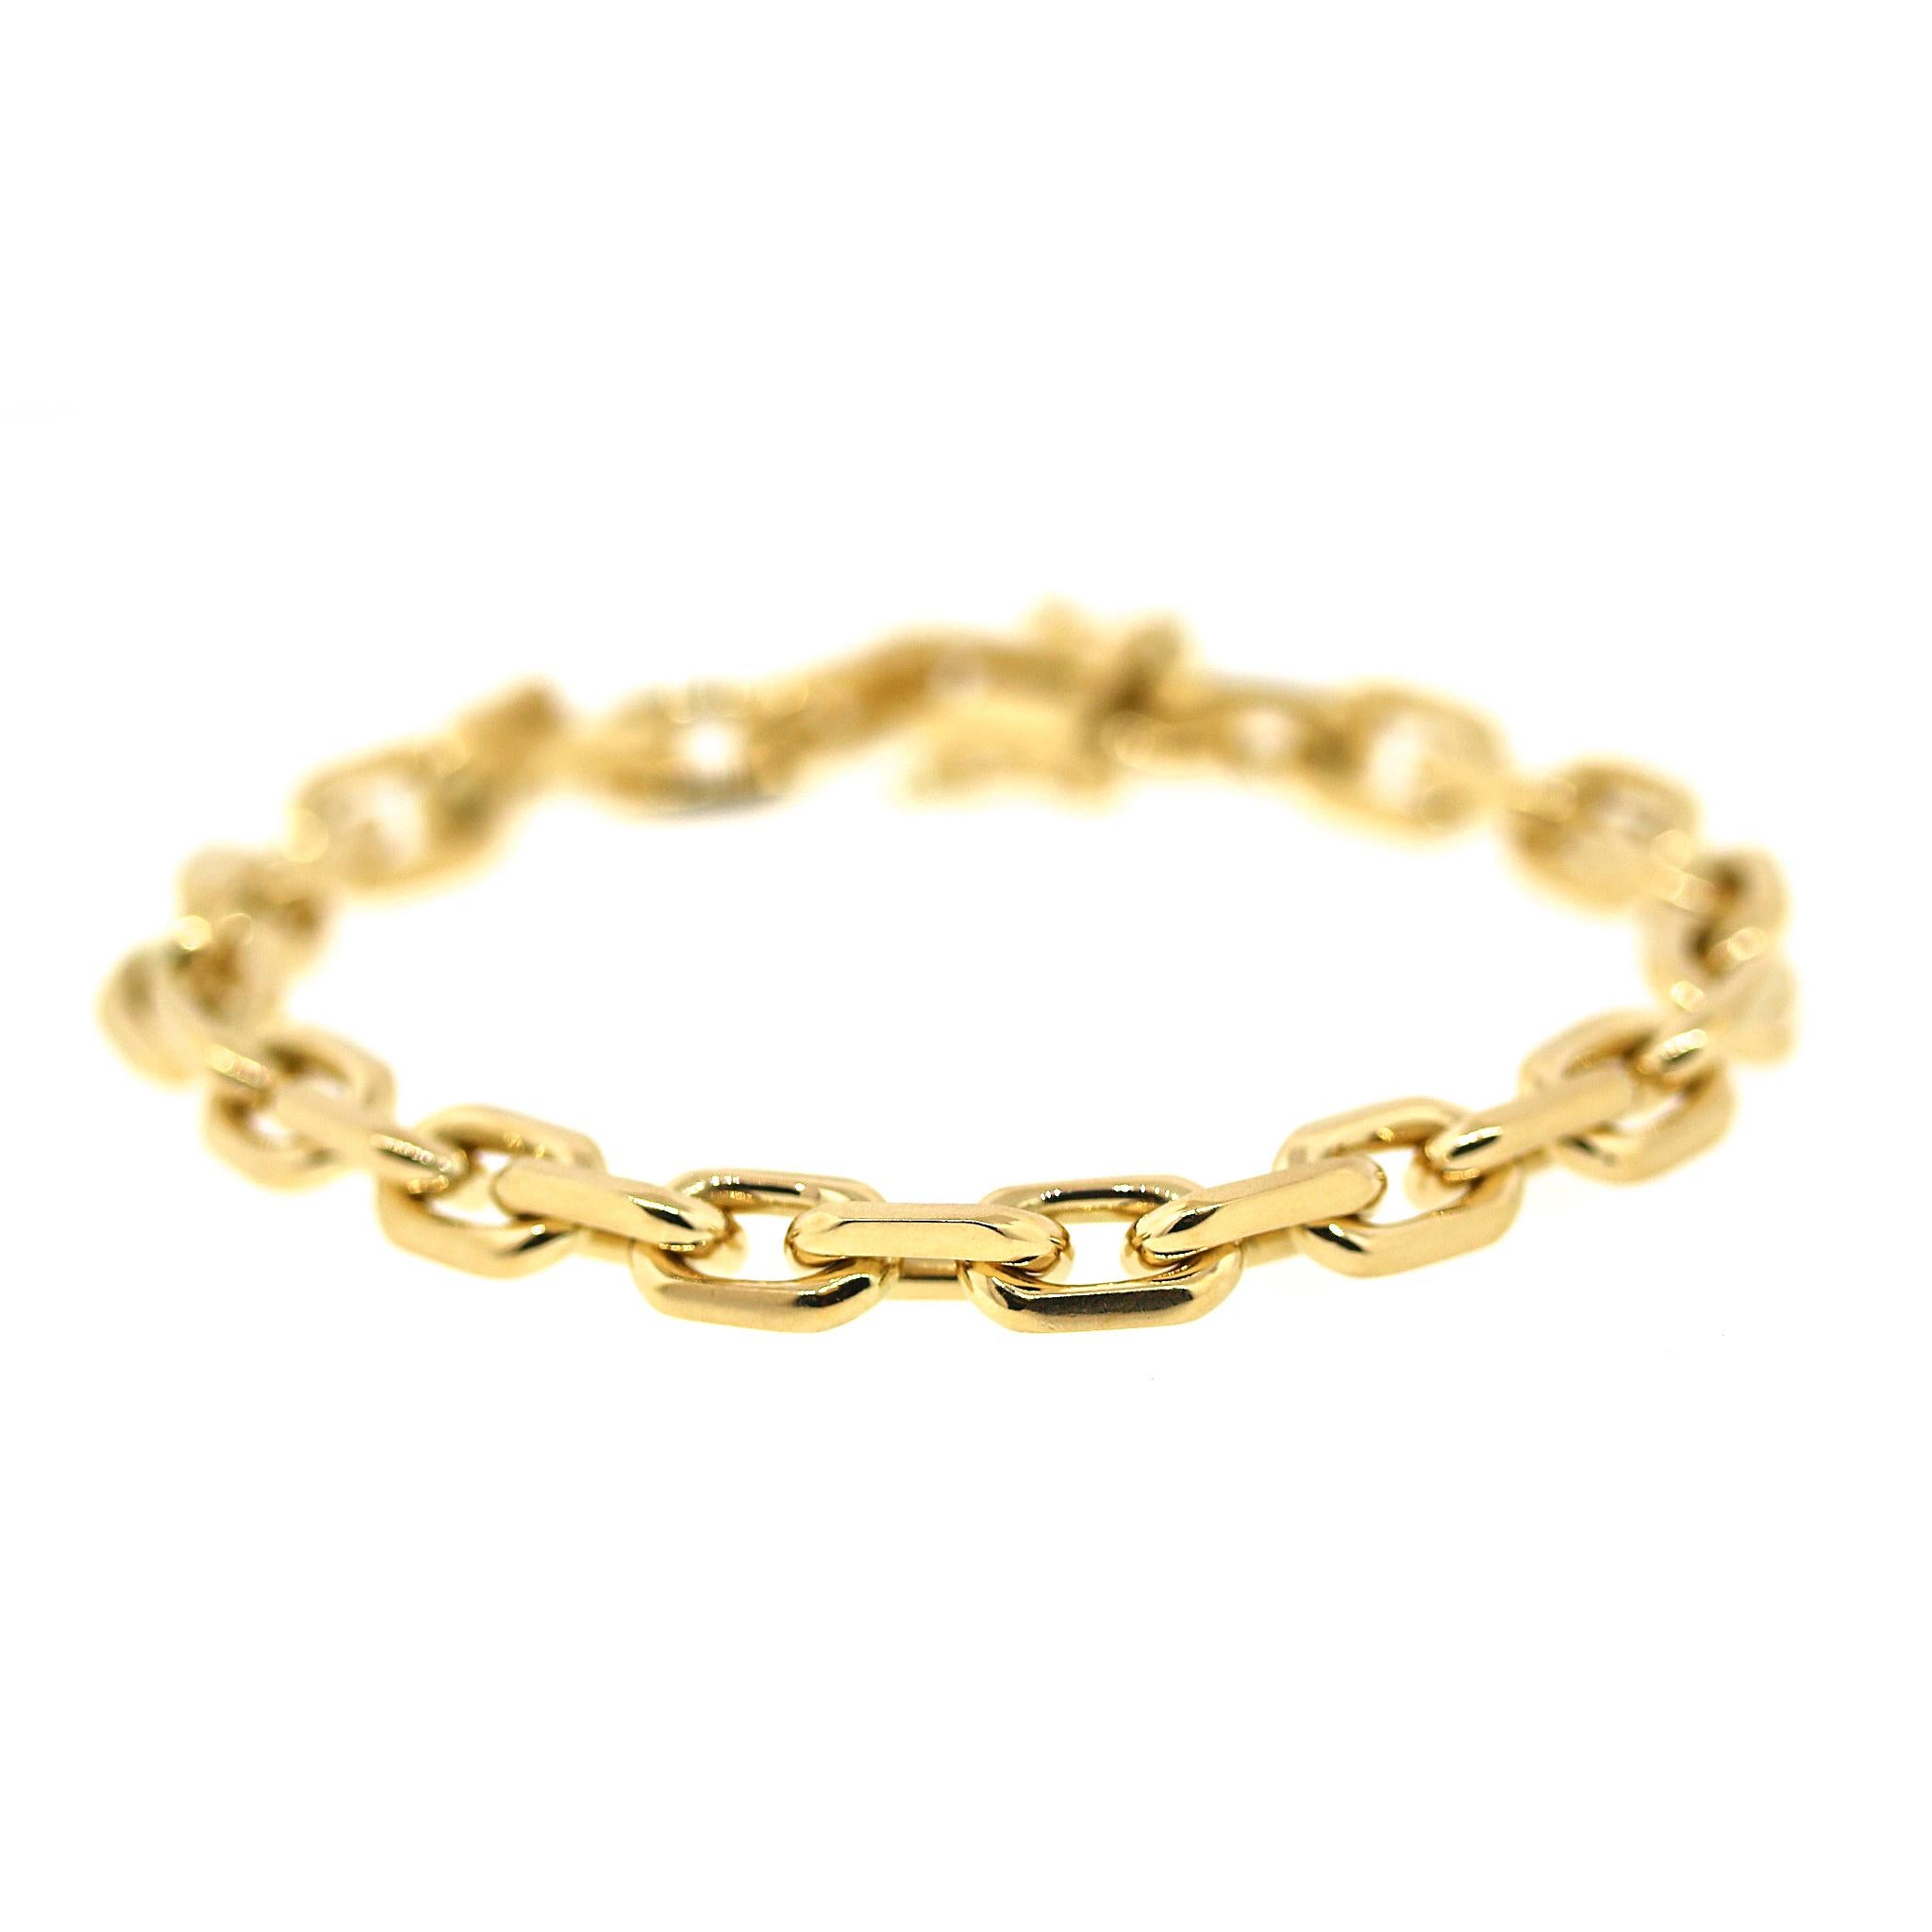 Solid 18k Yellow Gold Link Bracelet 1